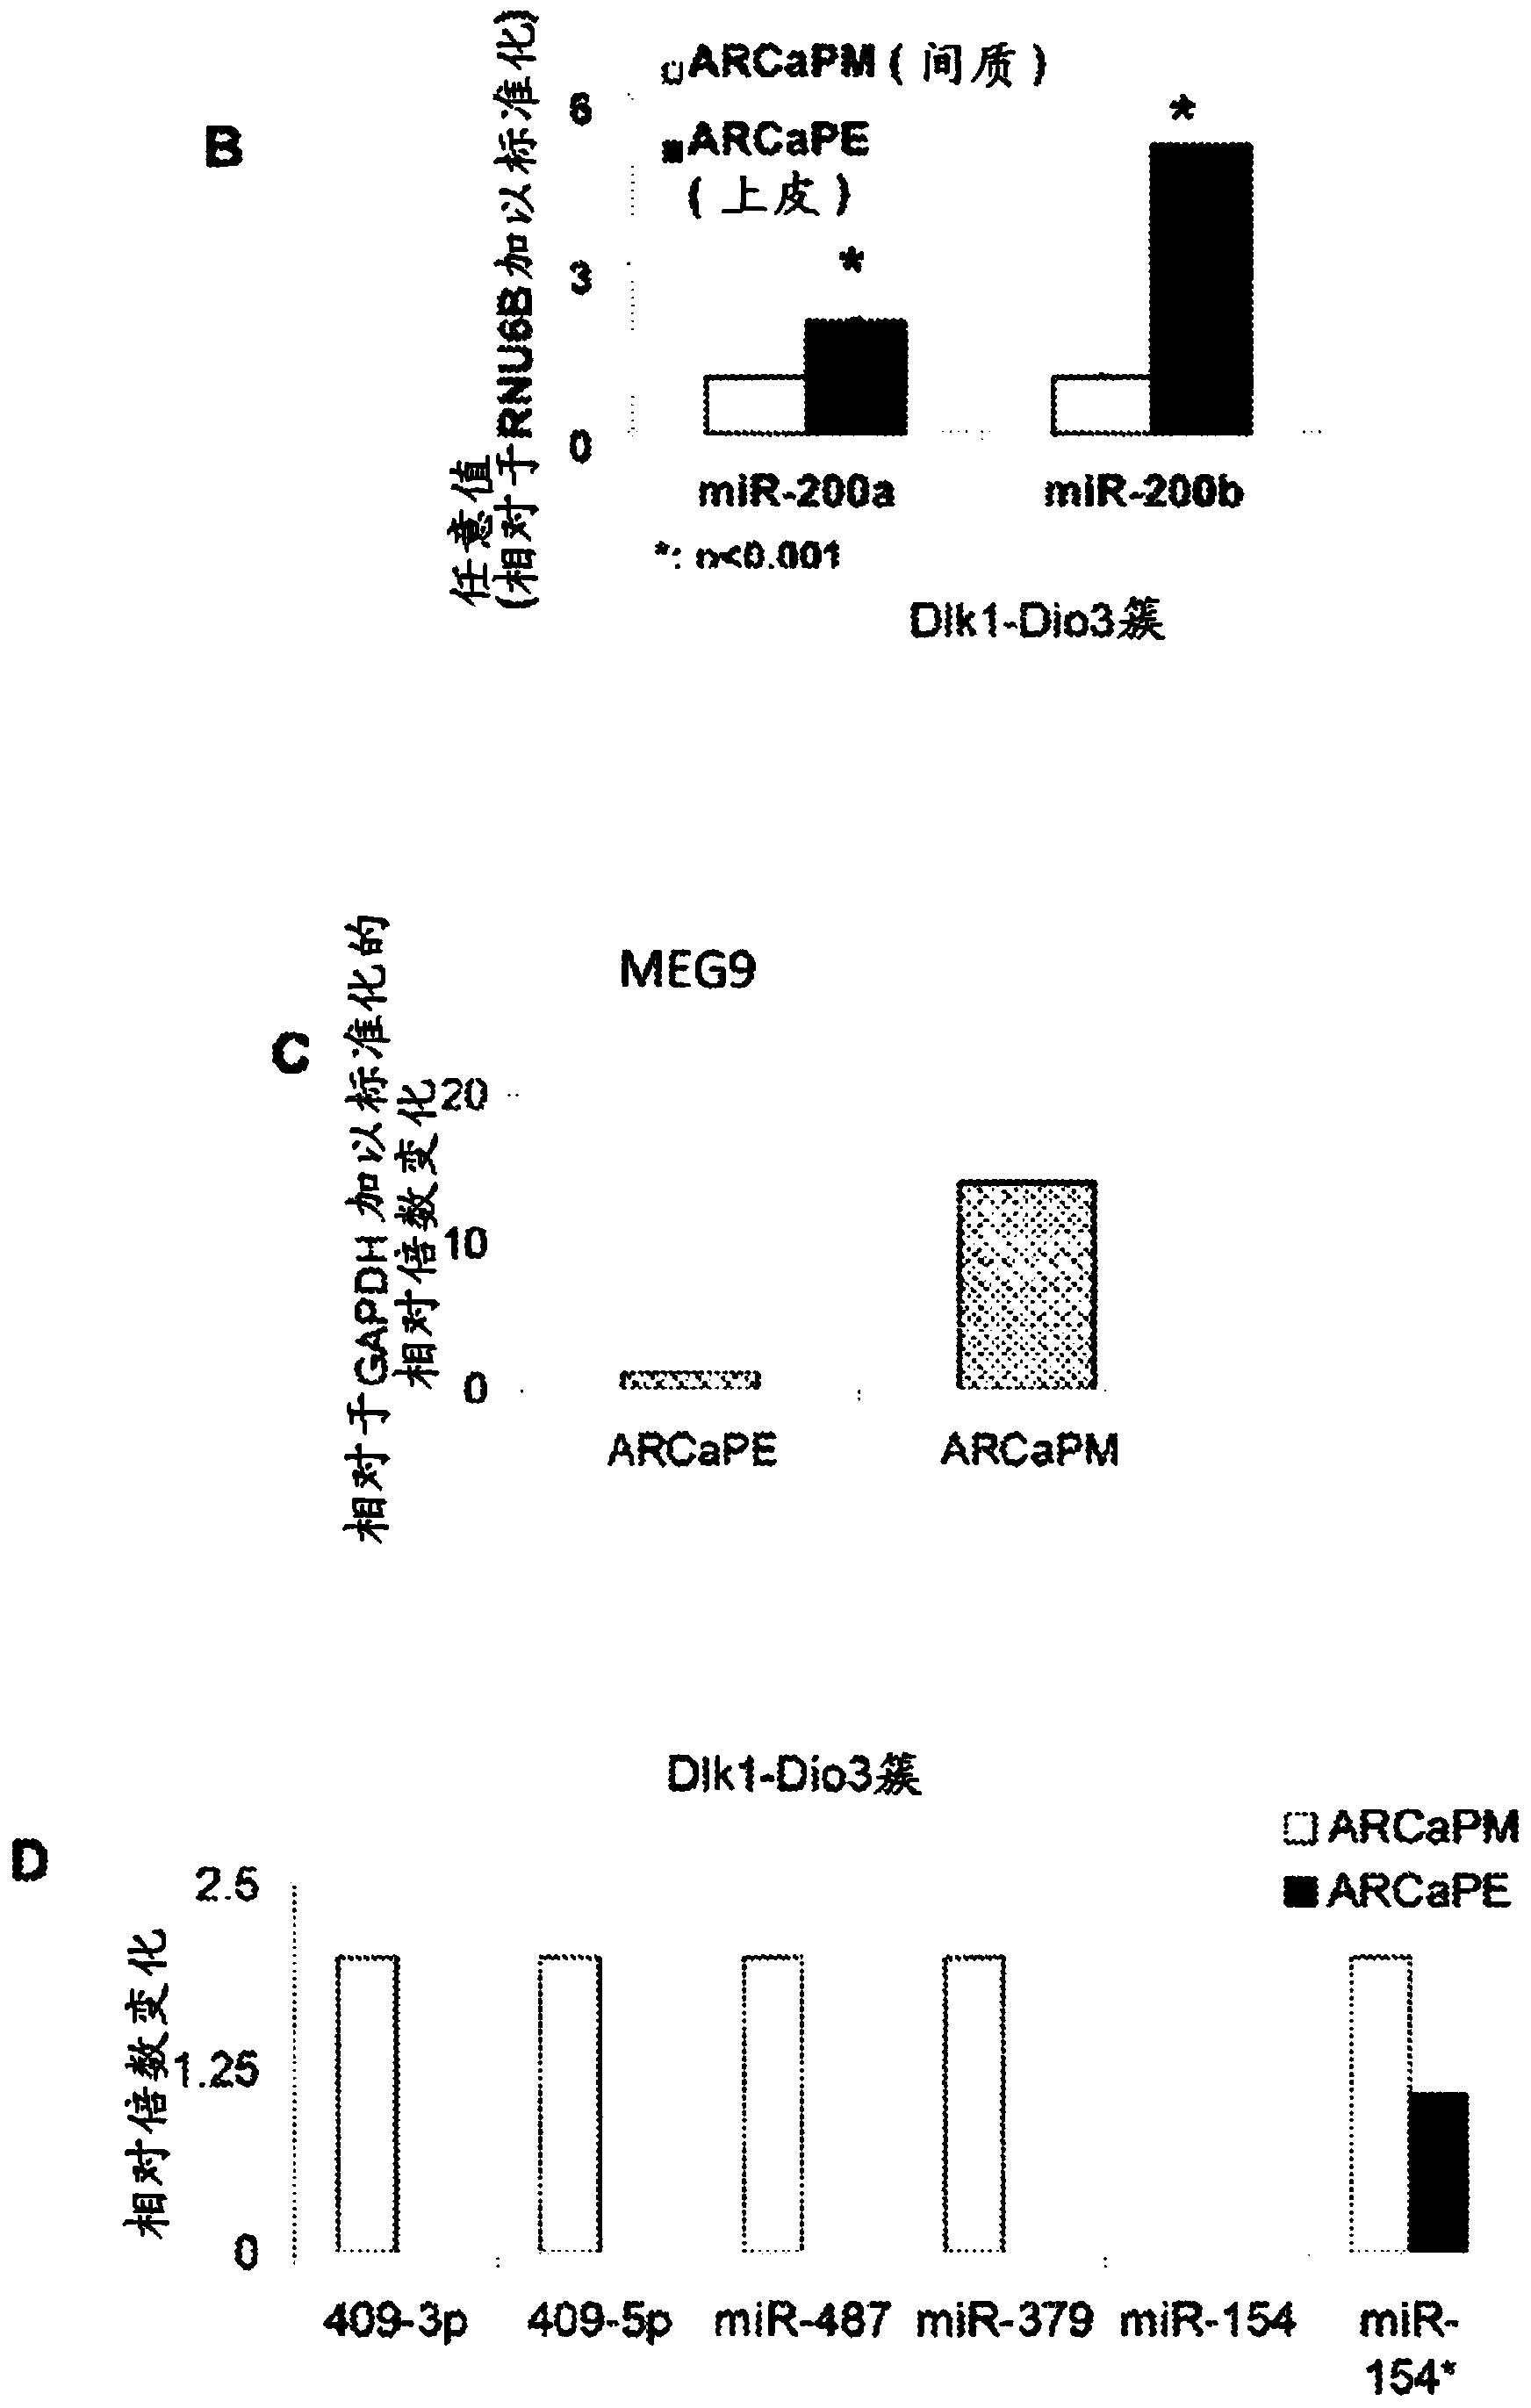 Targeting micro RNAS MIR-409-5P, MIR-379 AND MIR-154* to treat prostate cancer bone metastasis and drug resistant lung cancer